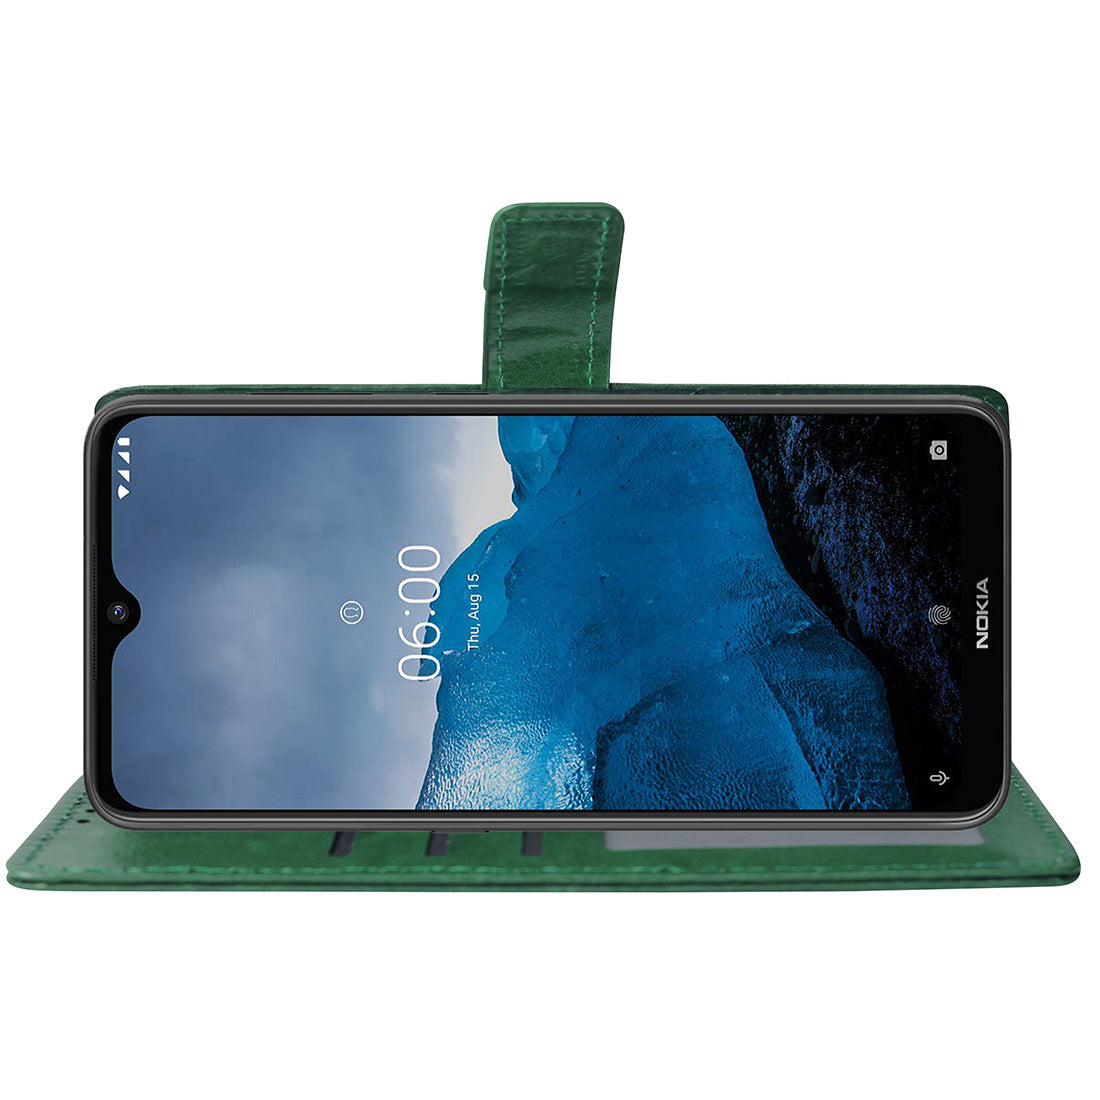 Premium Wallet Flip Cover for Nokia 6.2